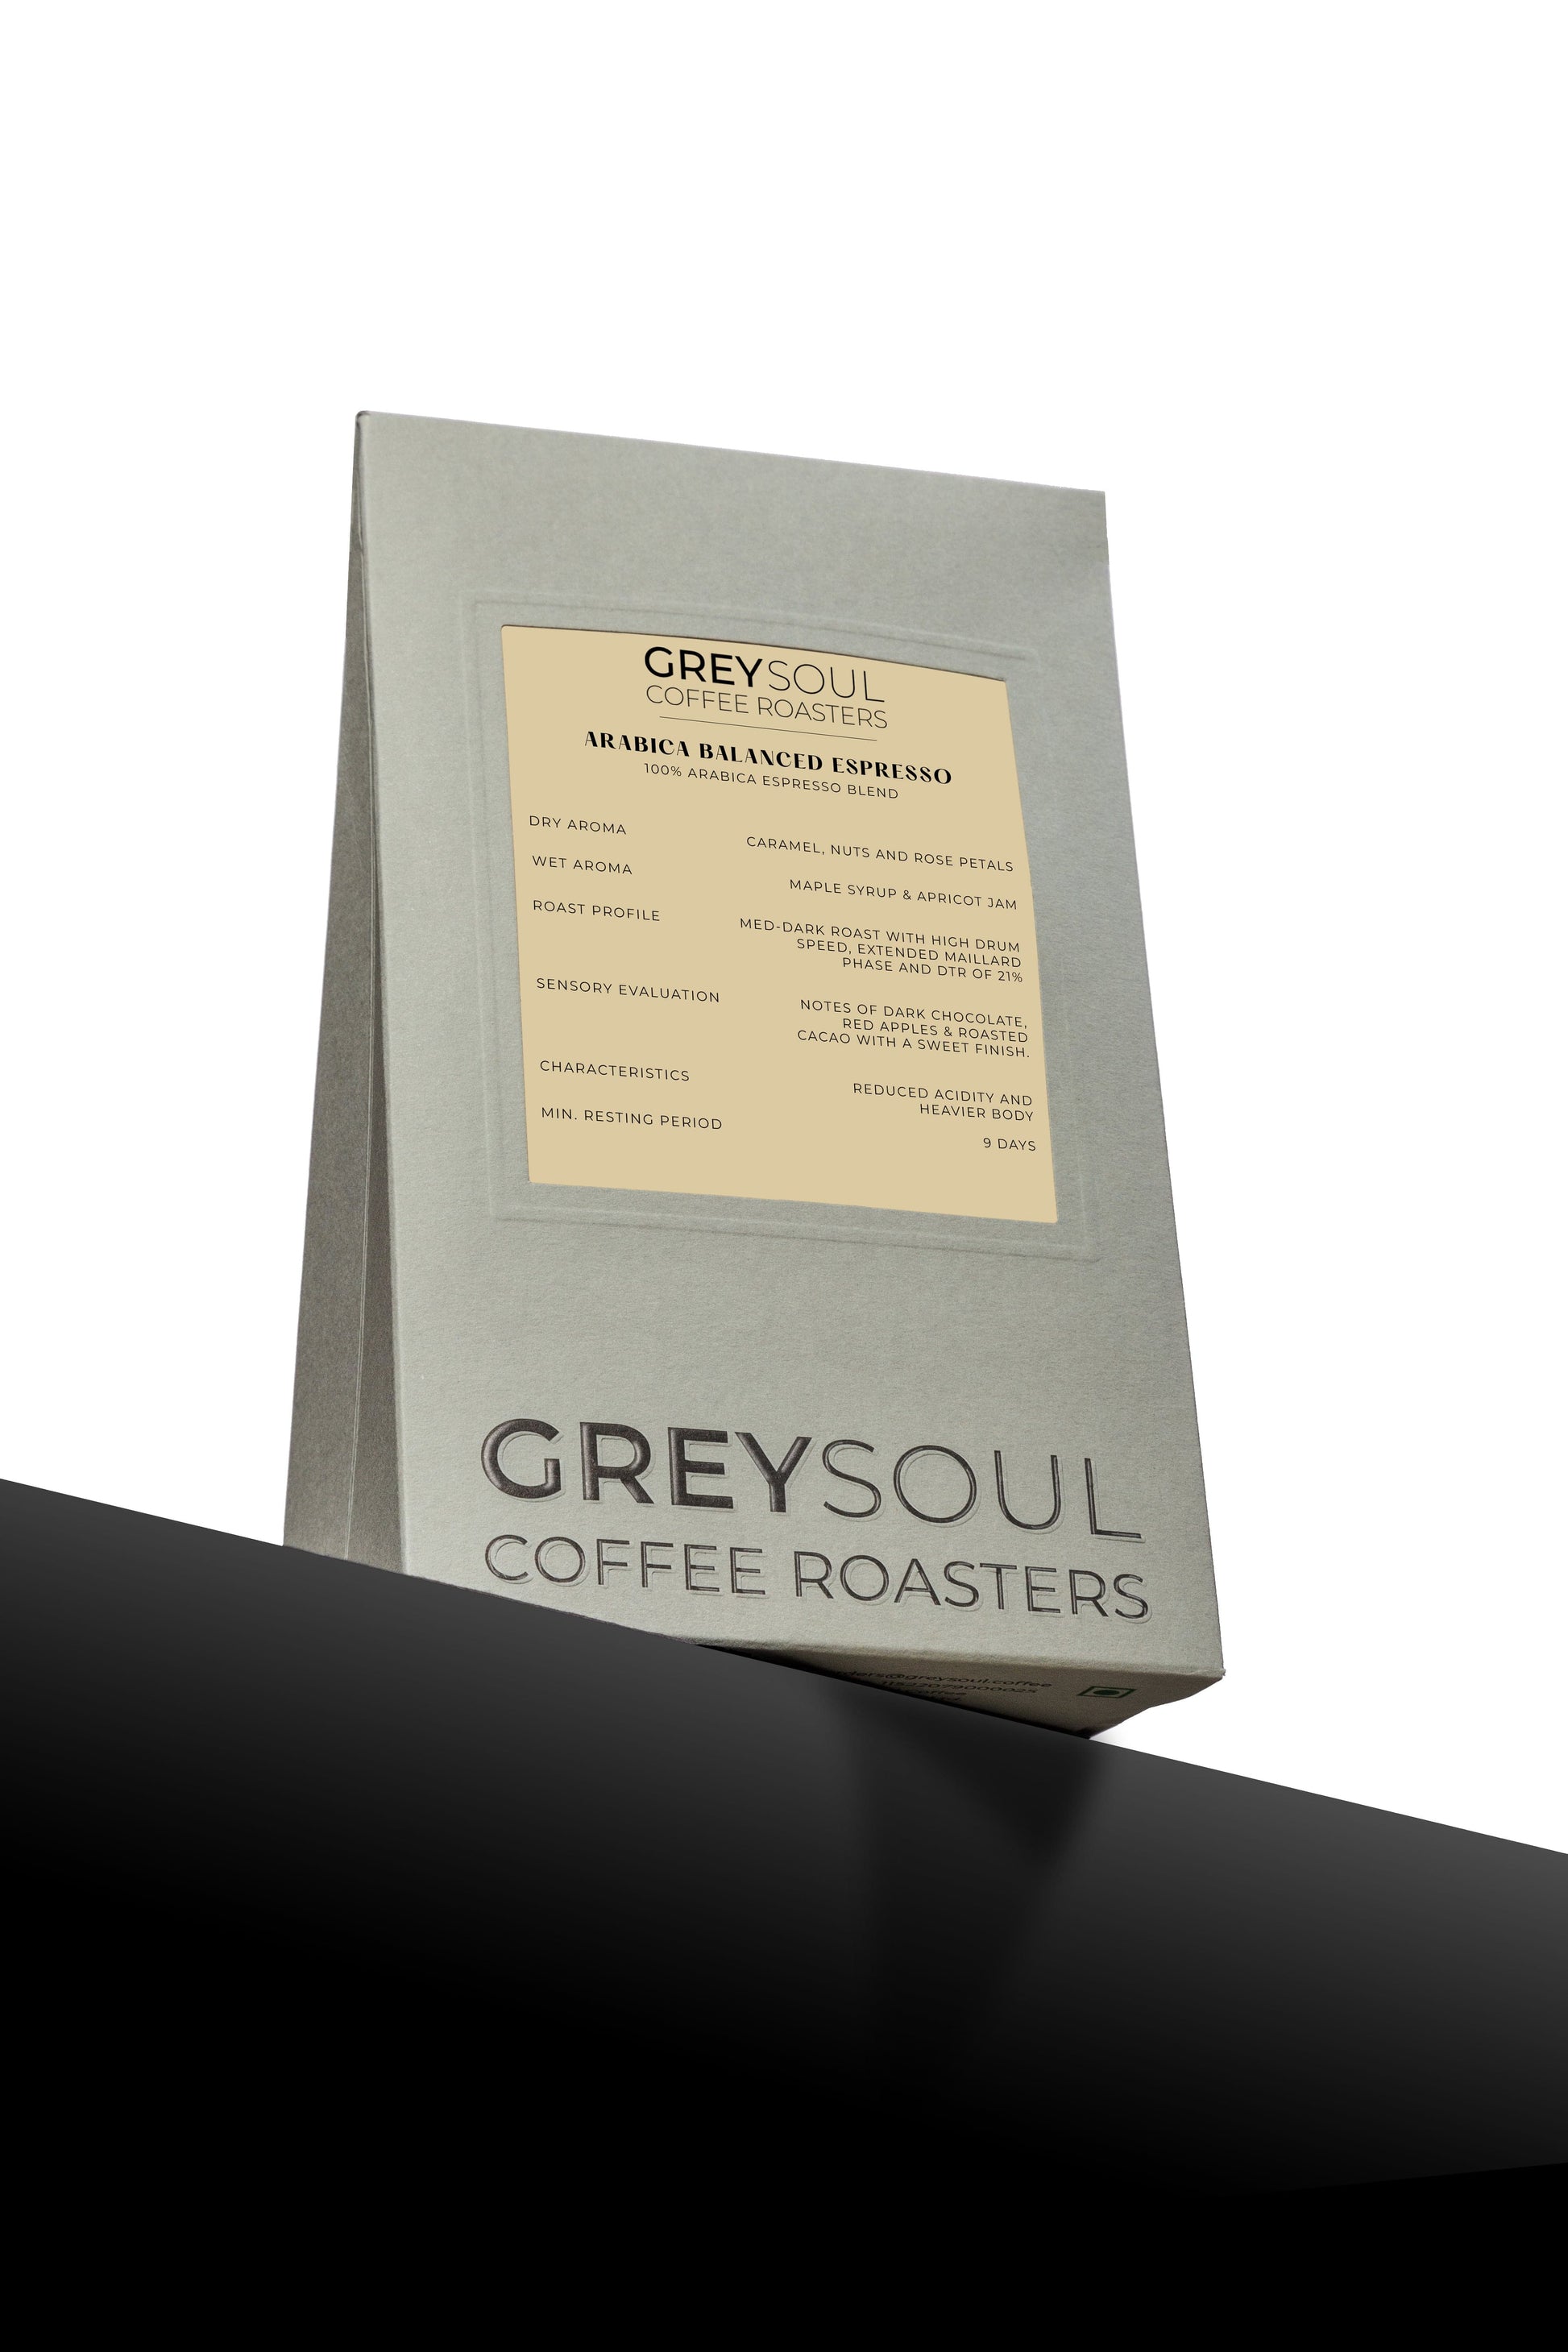 Greysoul Coffee Ground And Whole Beans Arabica Balanced Espresso( 10kgs Minimum Order)